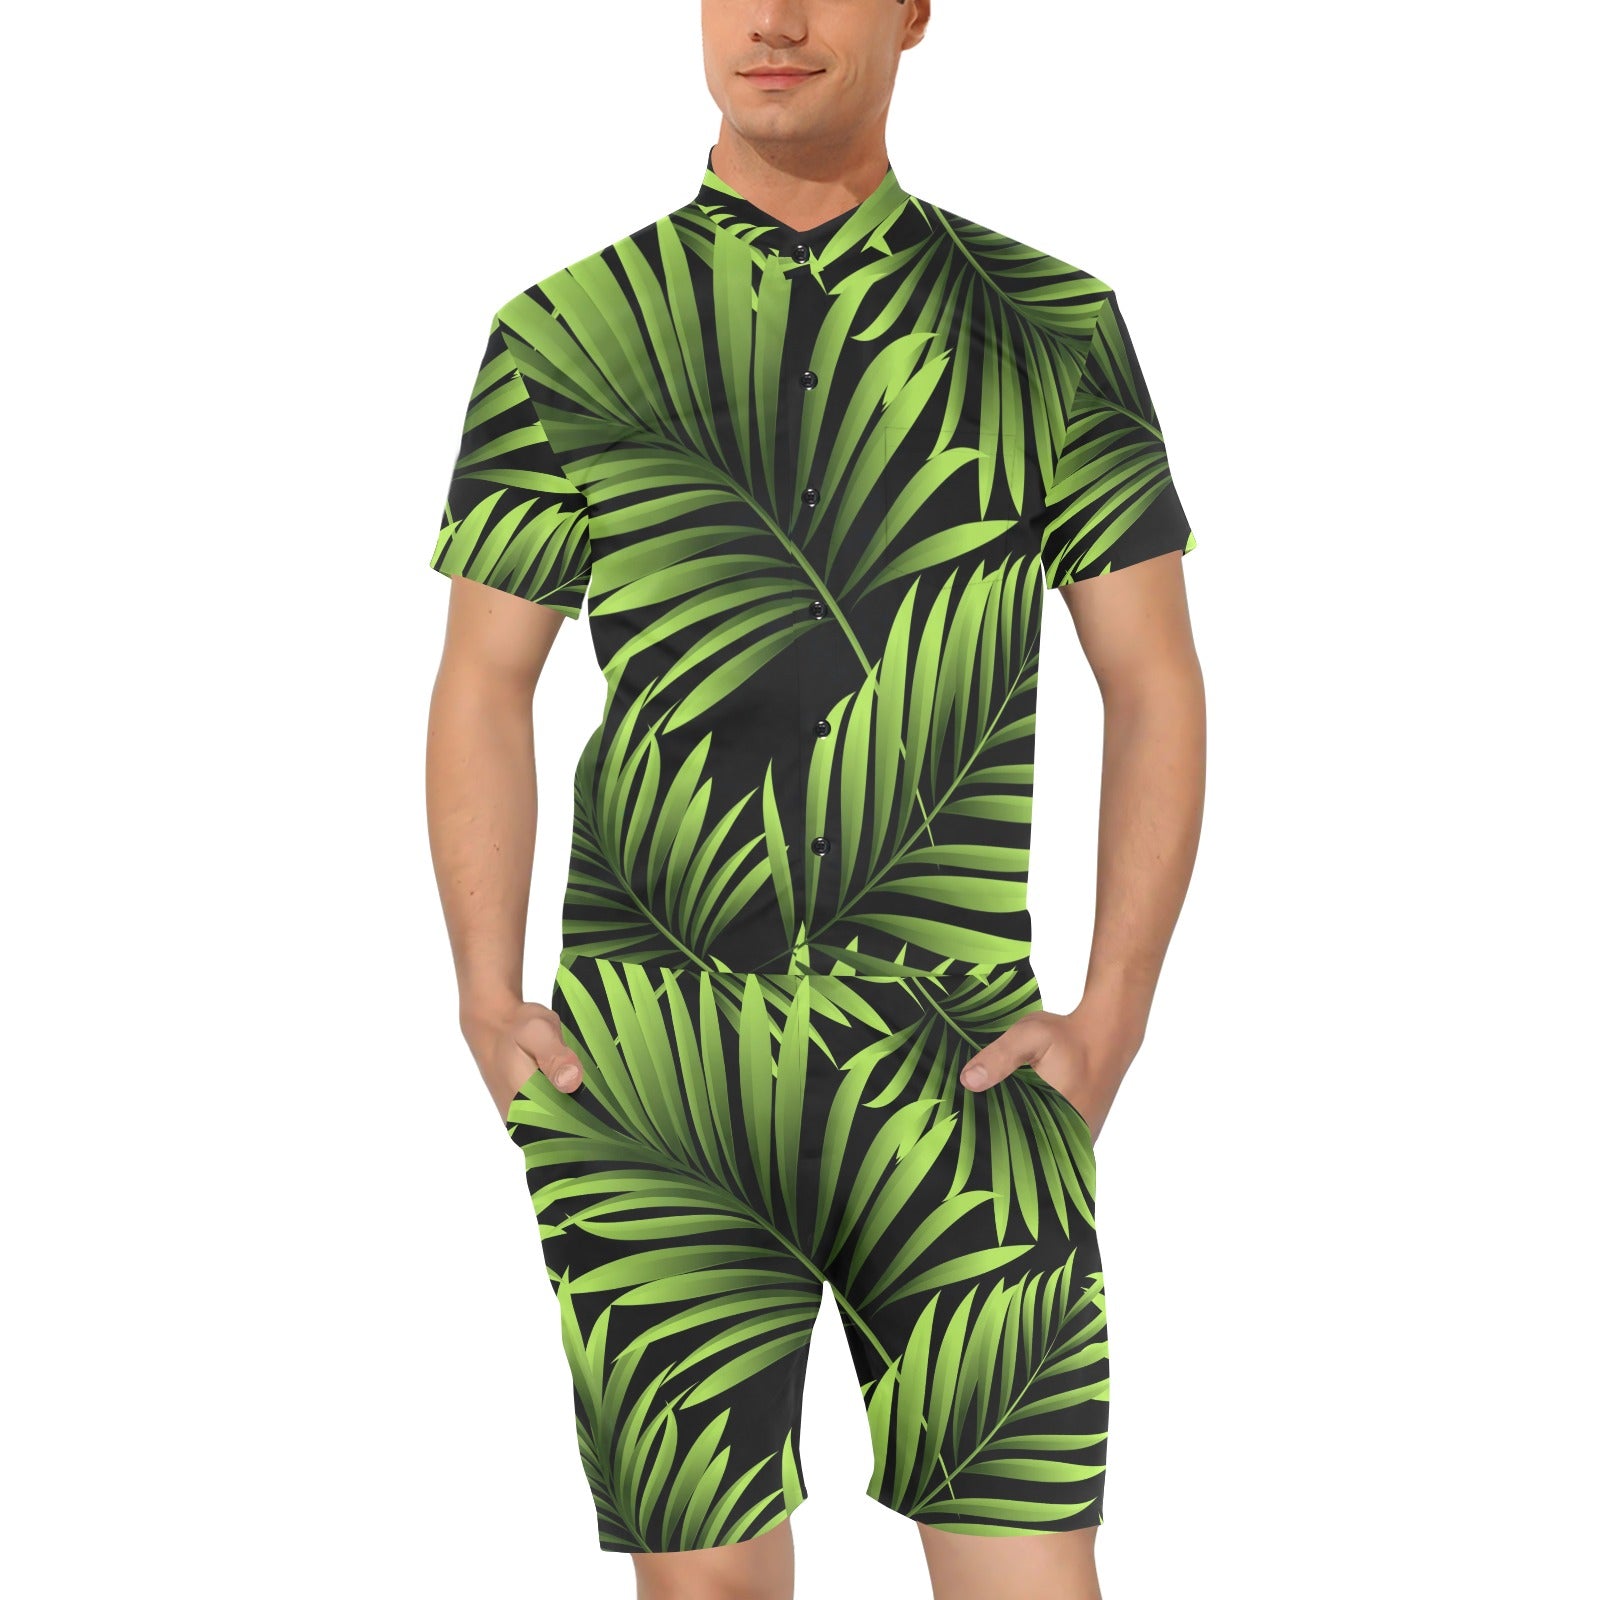 Green Neon Tropical Palm Leaves Men's Romper